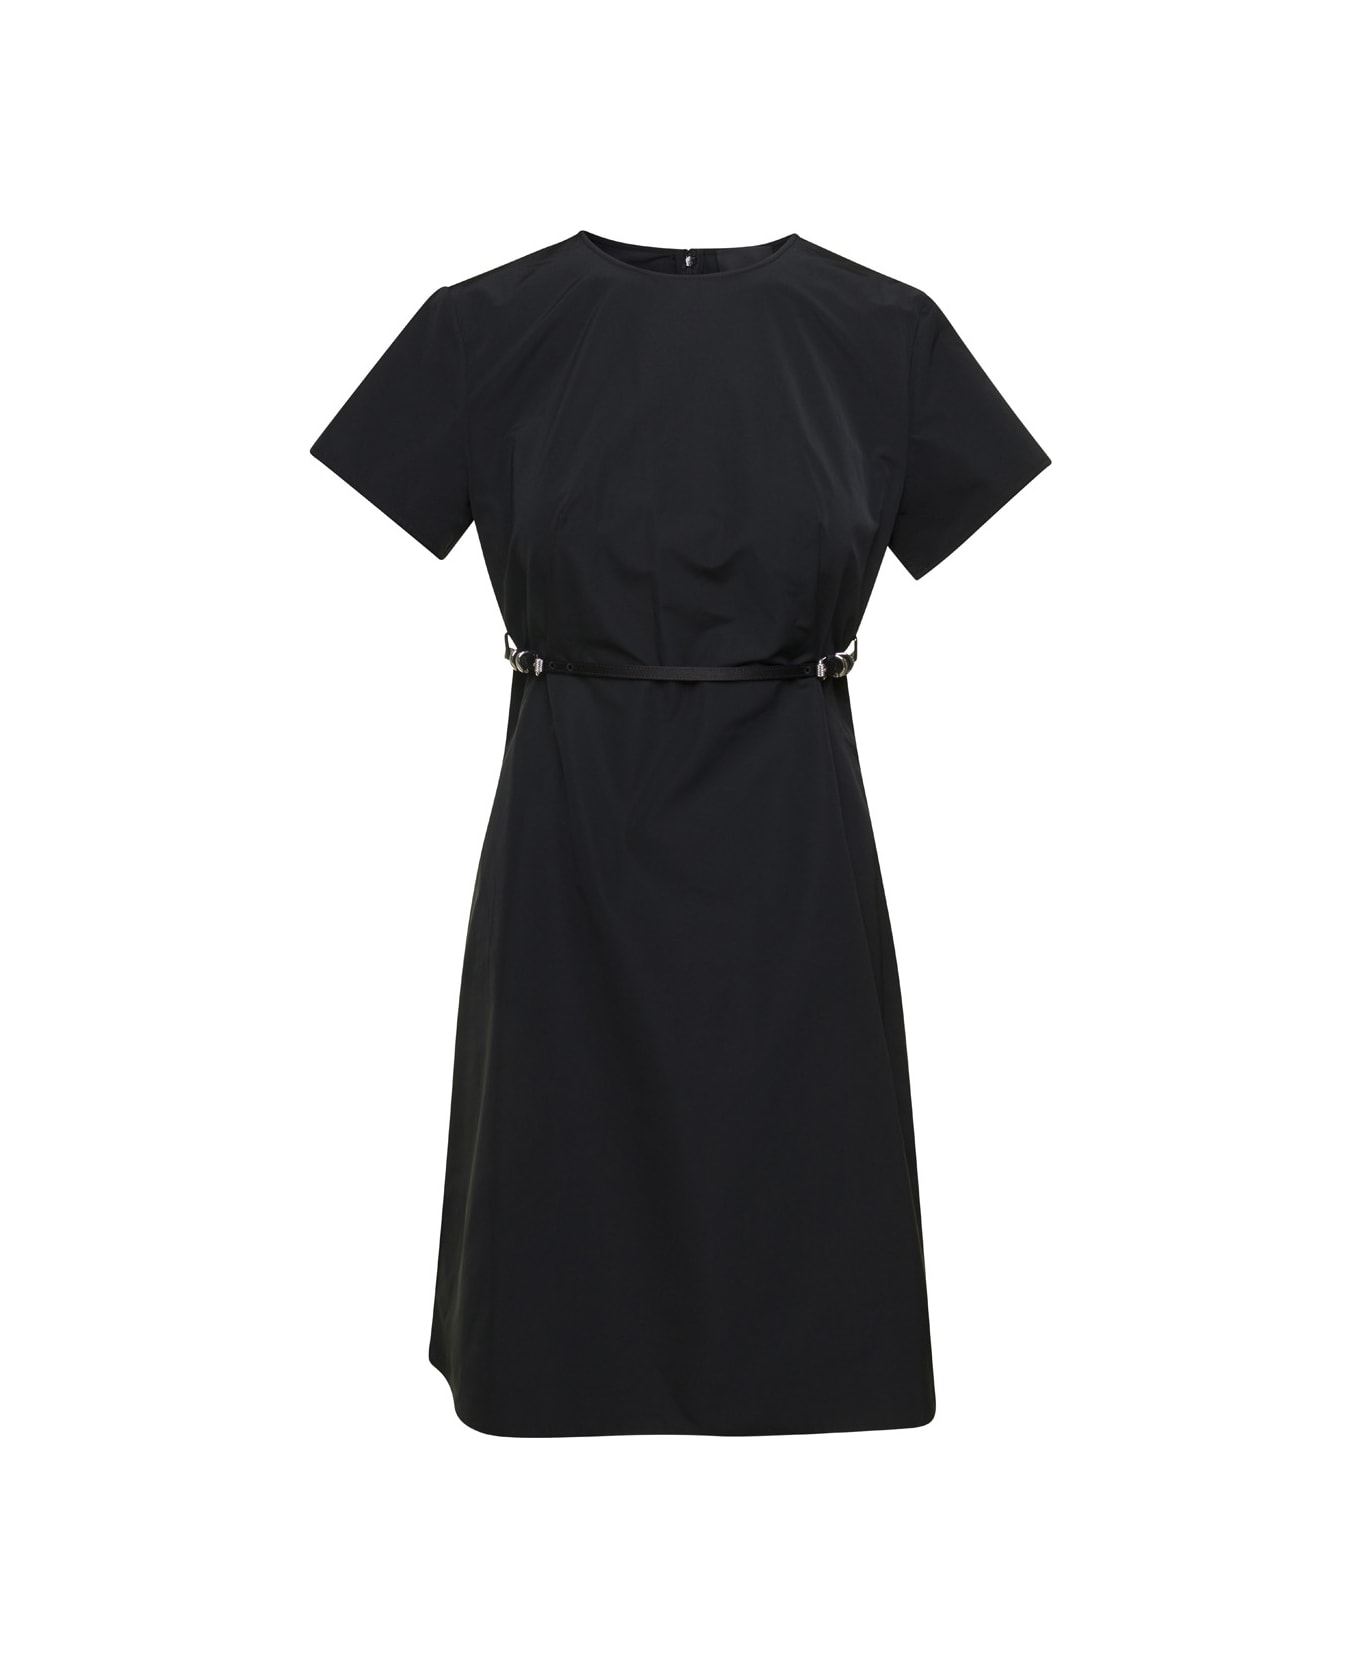 Givenchy Black Mini Dress With Belt In Taffeta Woman - Black